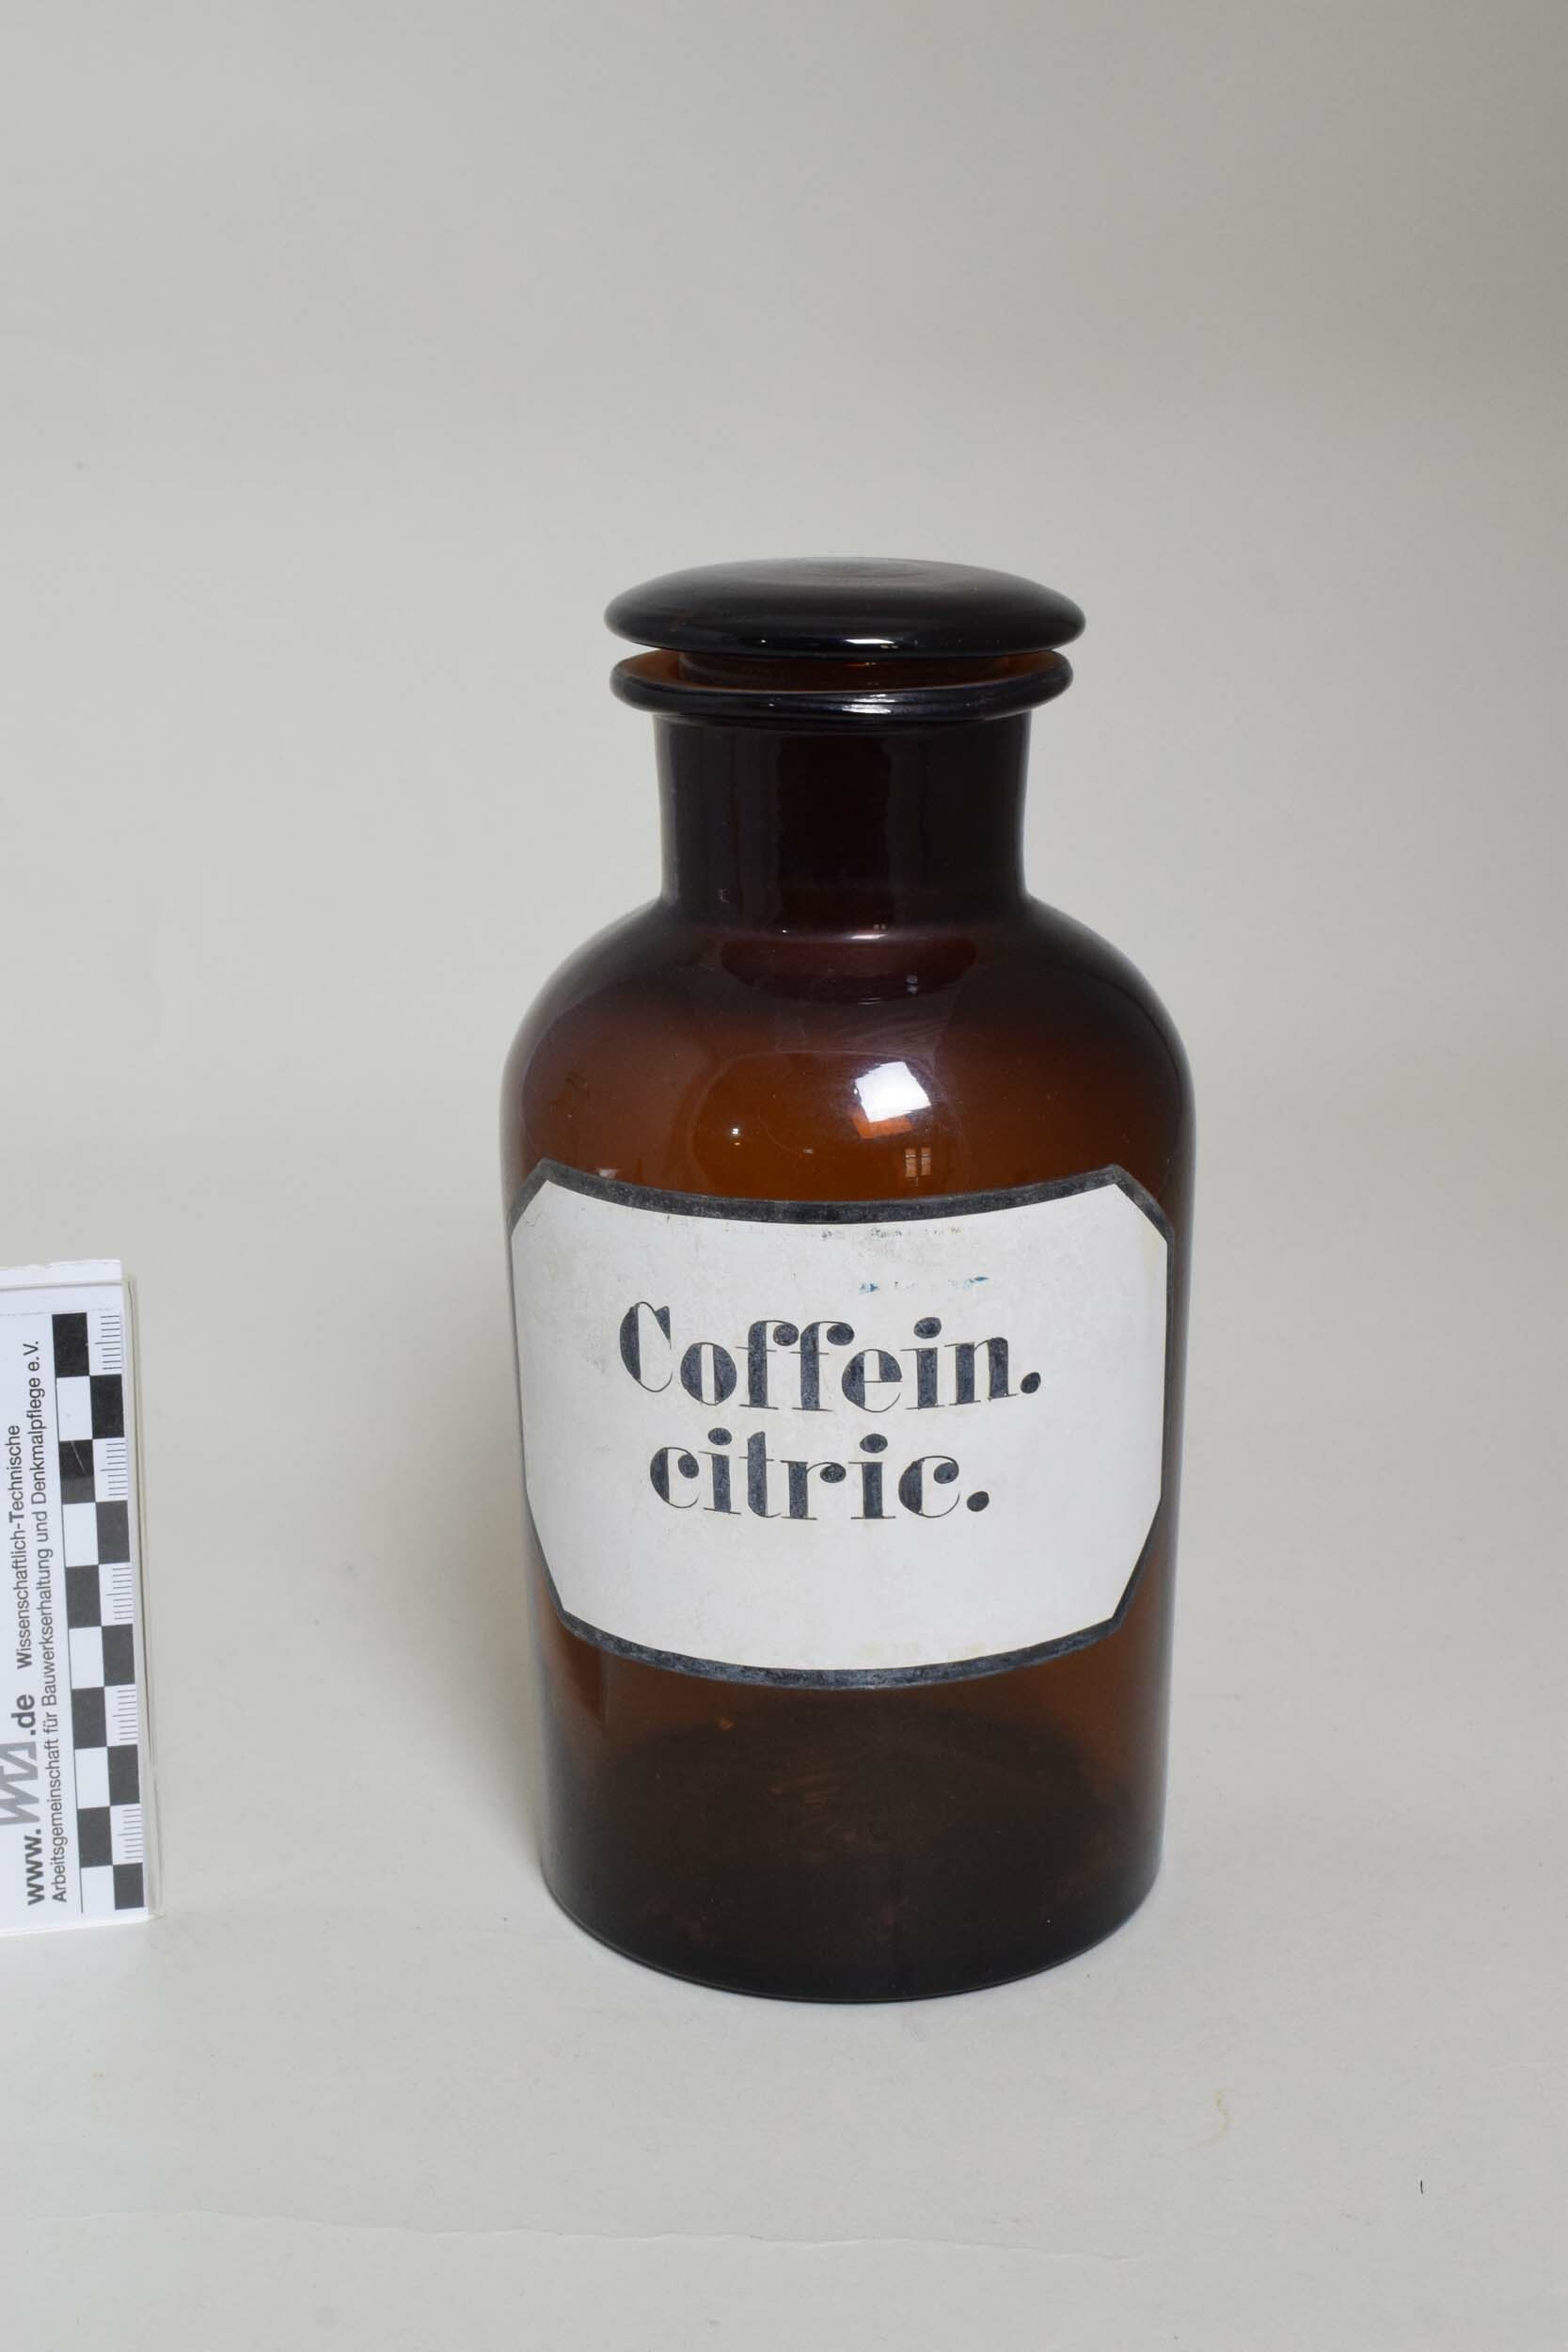 Apothekenflasche "Coffein. citric." (Heimatmuseum Dohna CC BY-NC-SA)